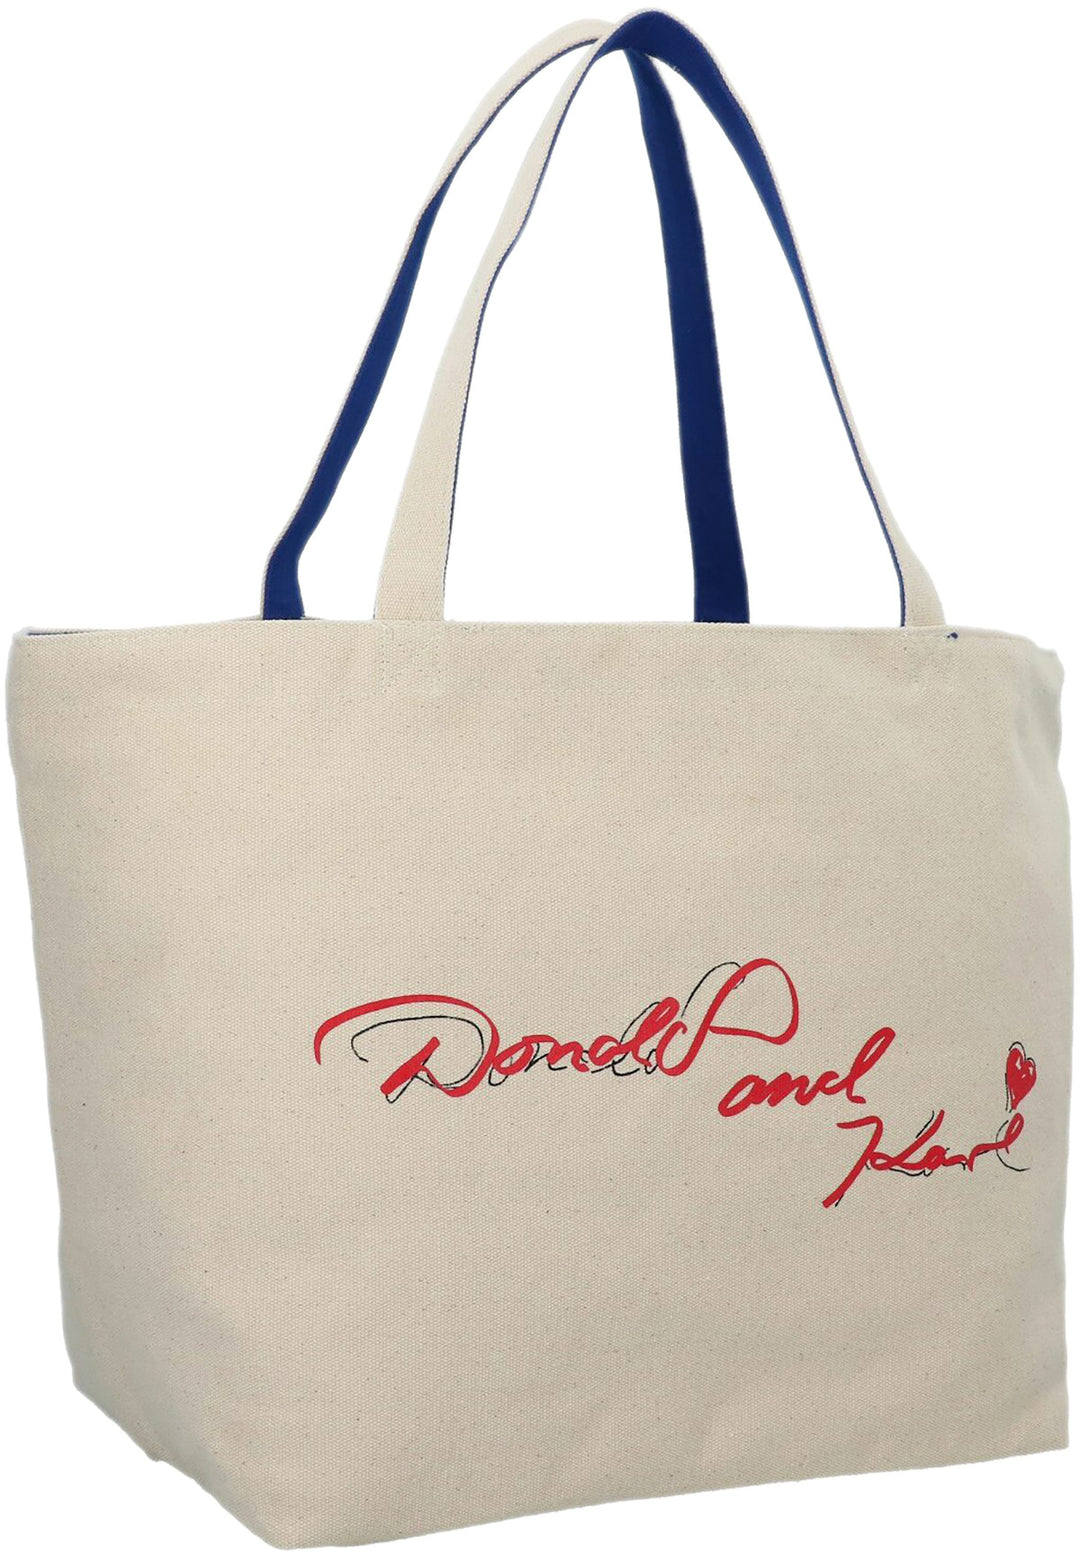 Karl Lagerfeld X Disney Tote Bag In Blue Beige For Women